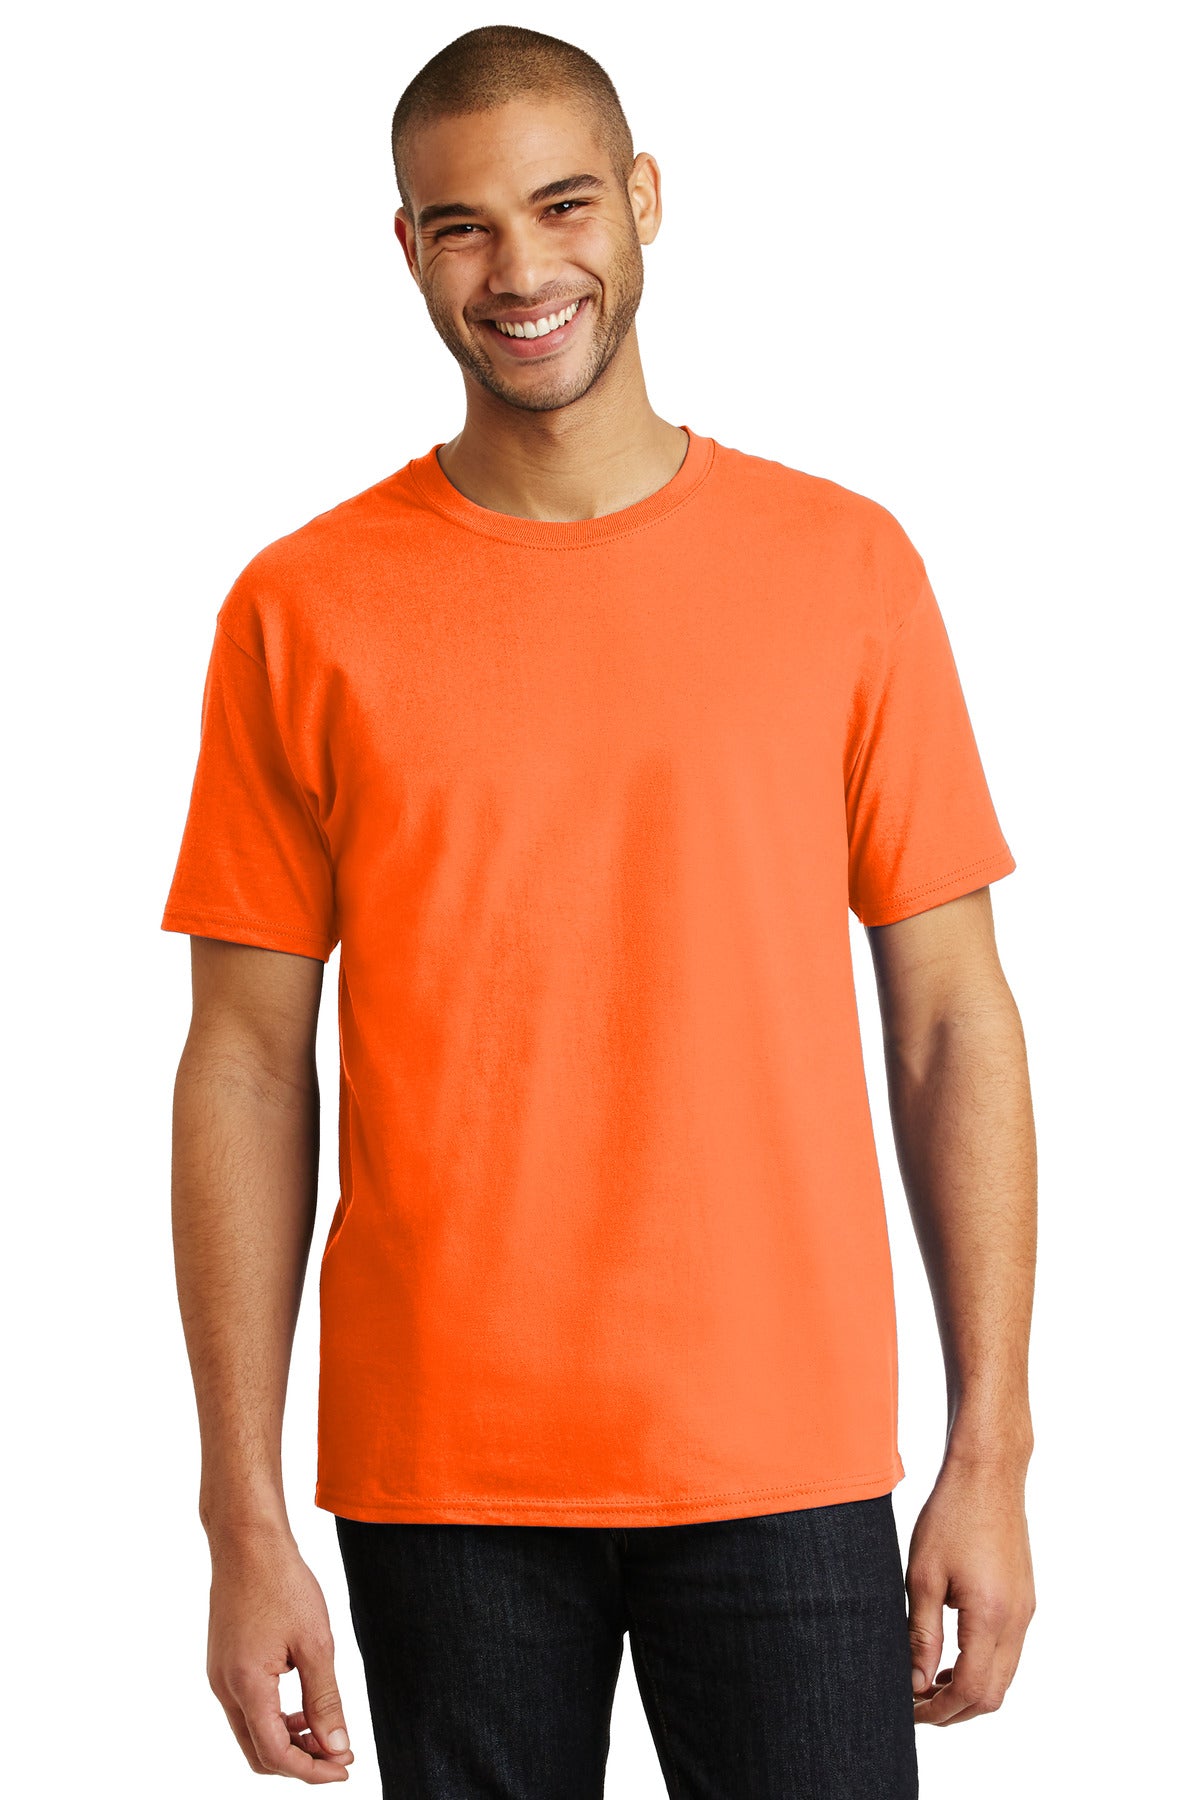 T-Shirts Safety Orange Hanes